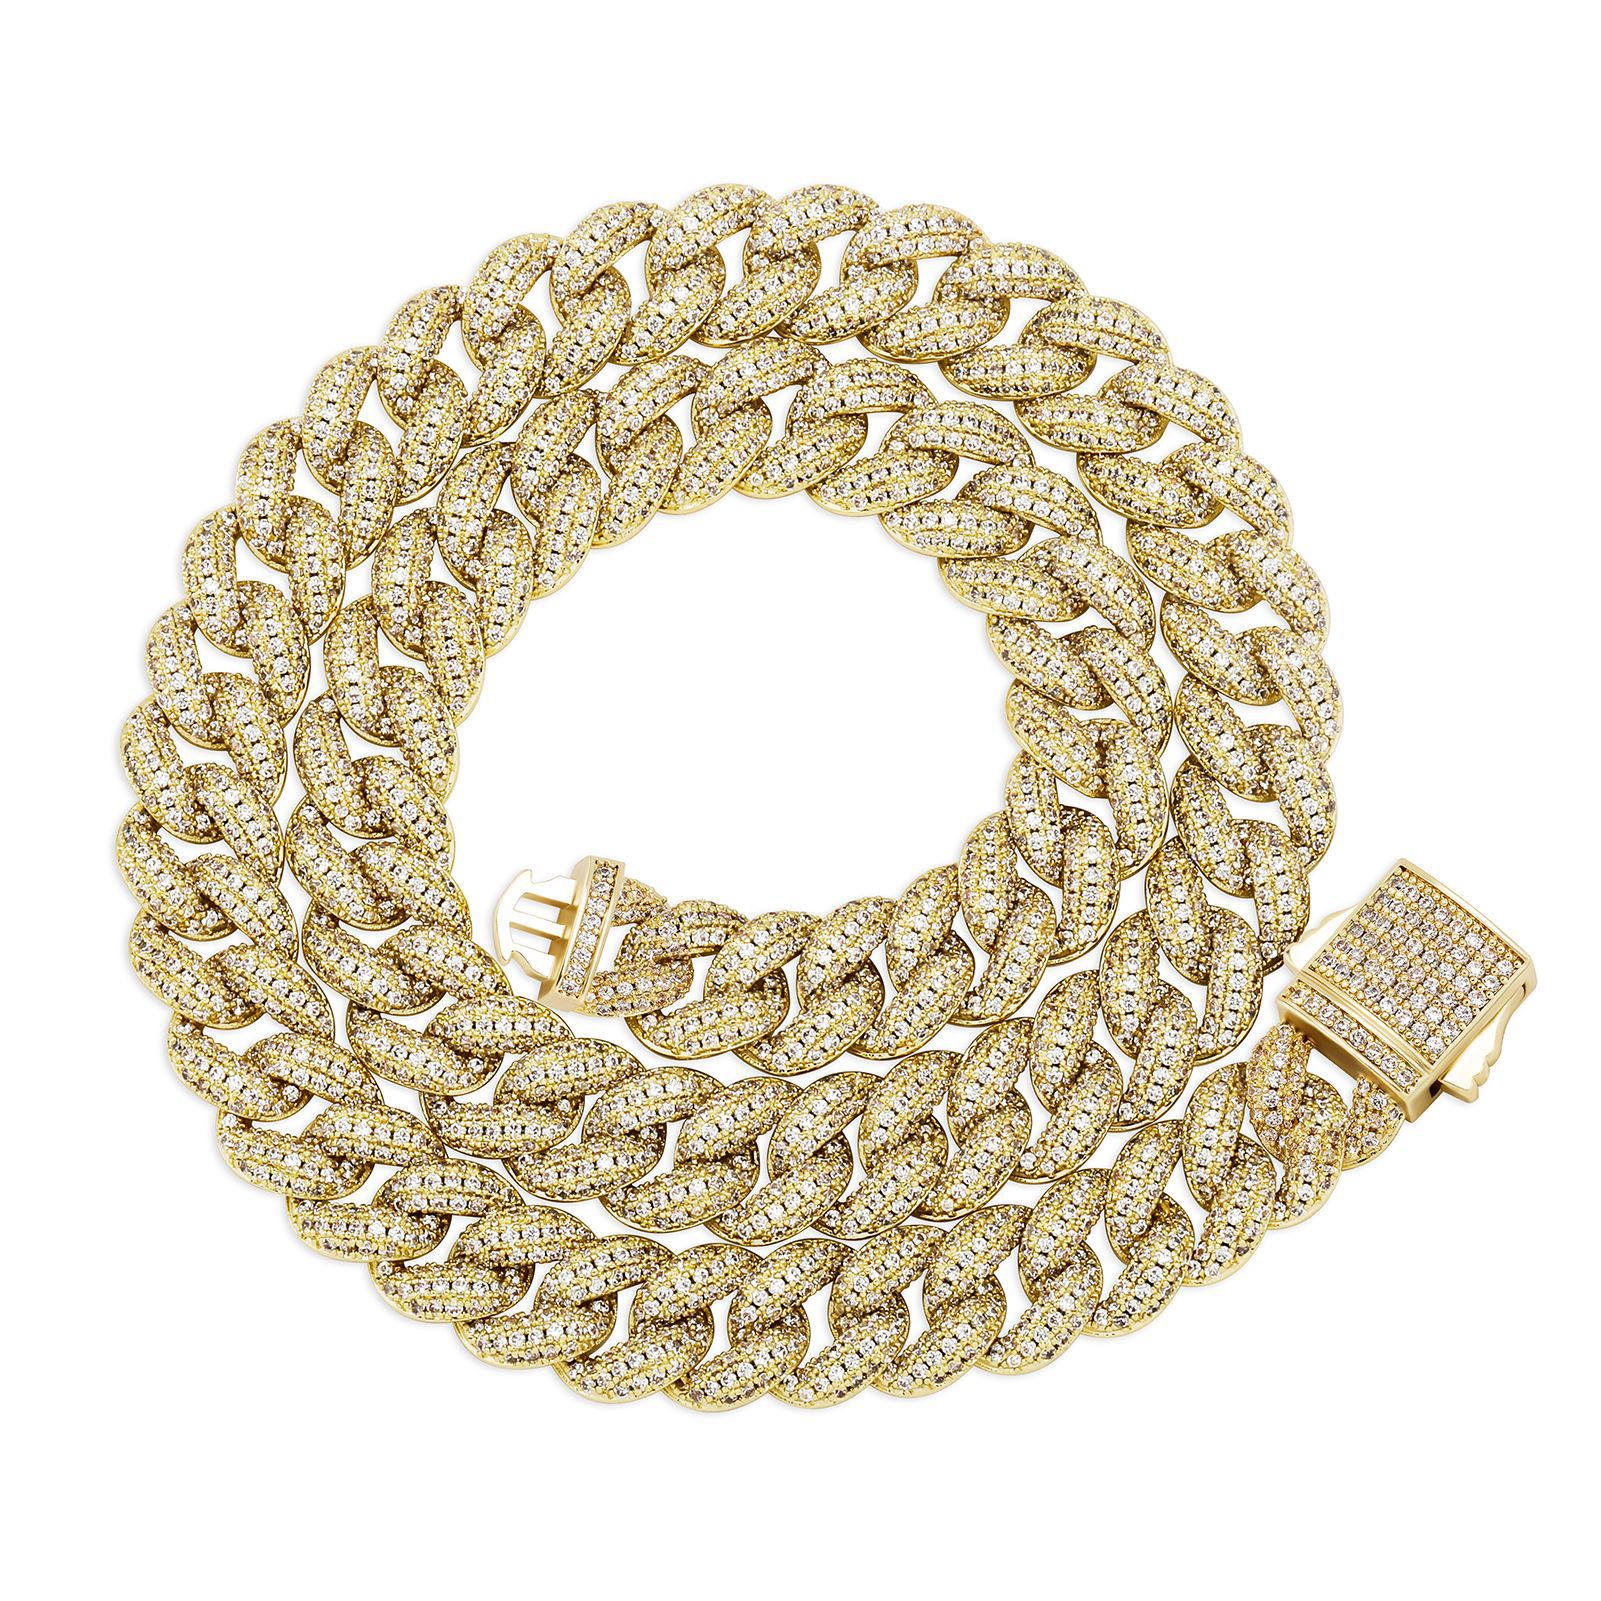 2:Bracelet gold 22 inch